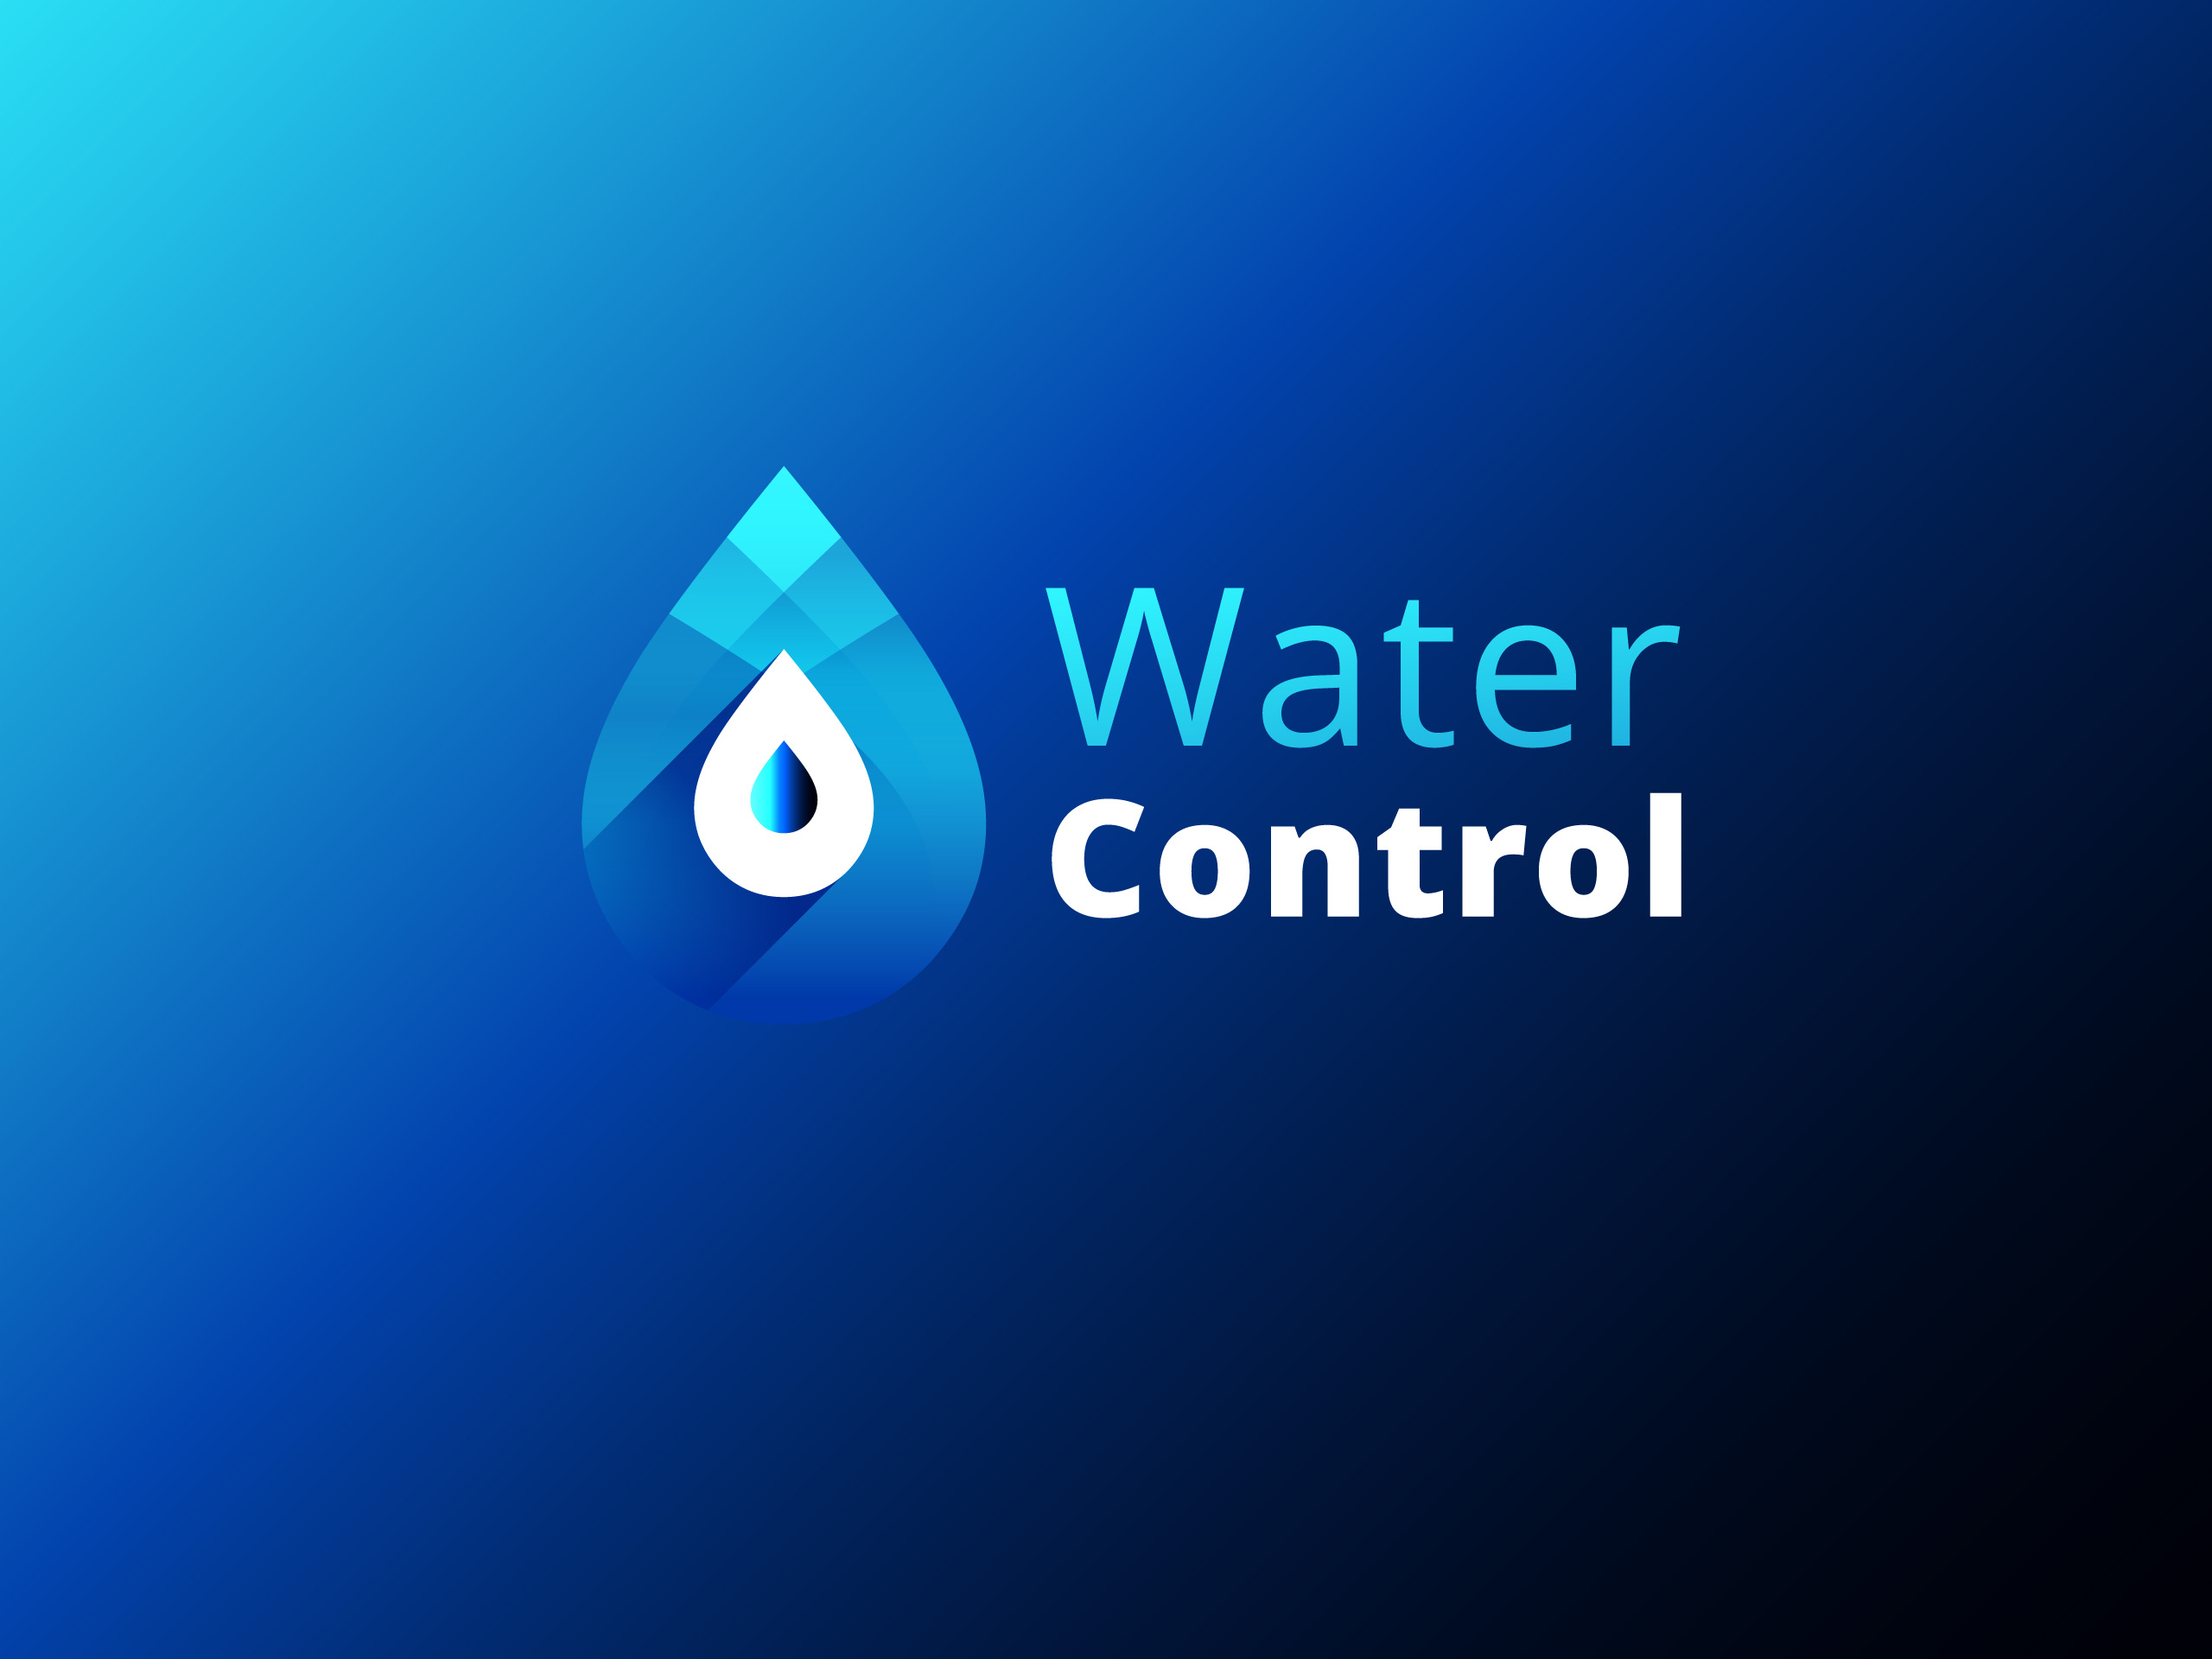 Control uz. Water Control. Engo Controls лого. EVO Controls логотип. Water Control.uz.